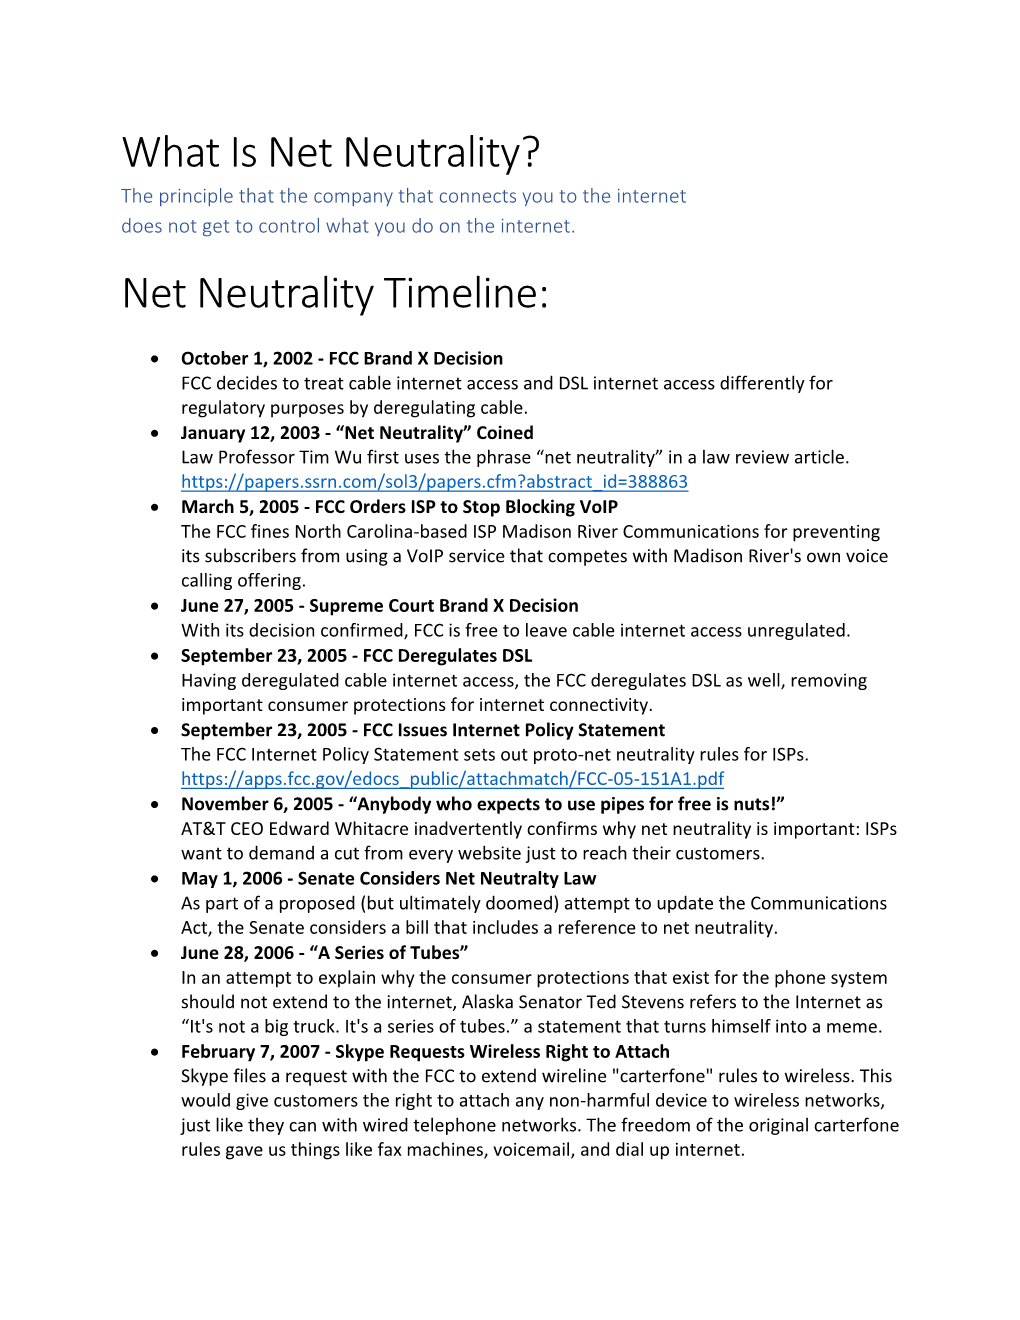 Net Neutrality Timeline